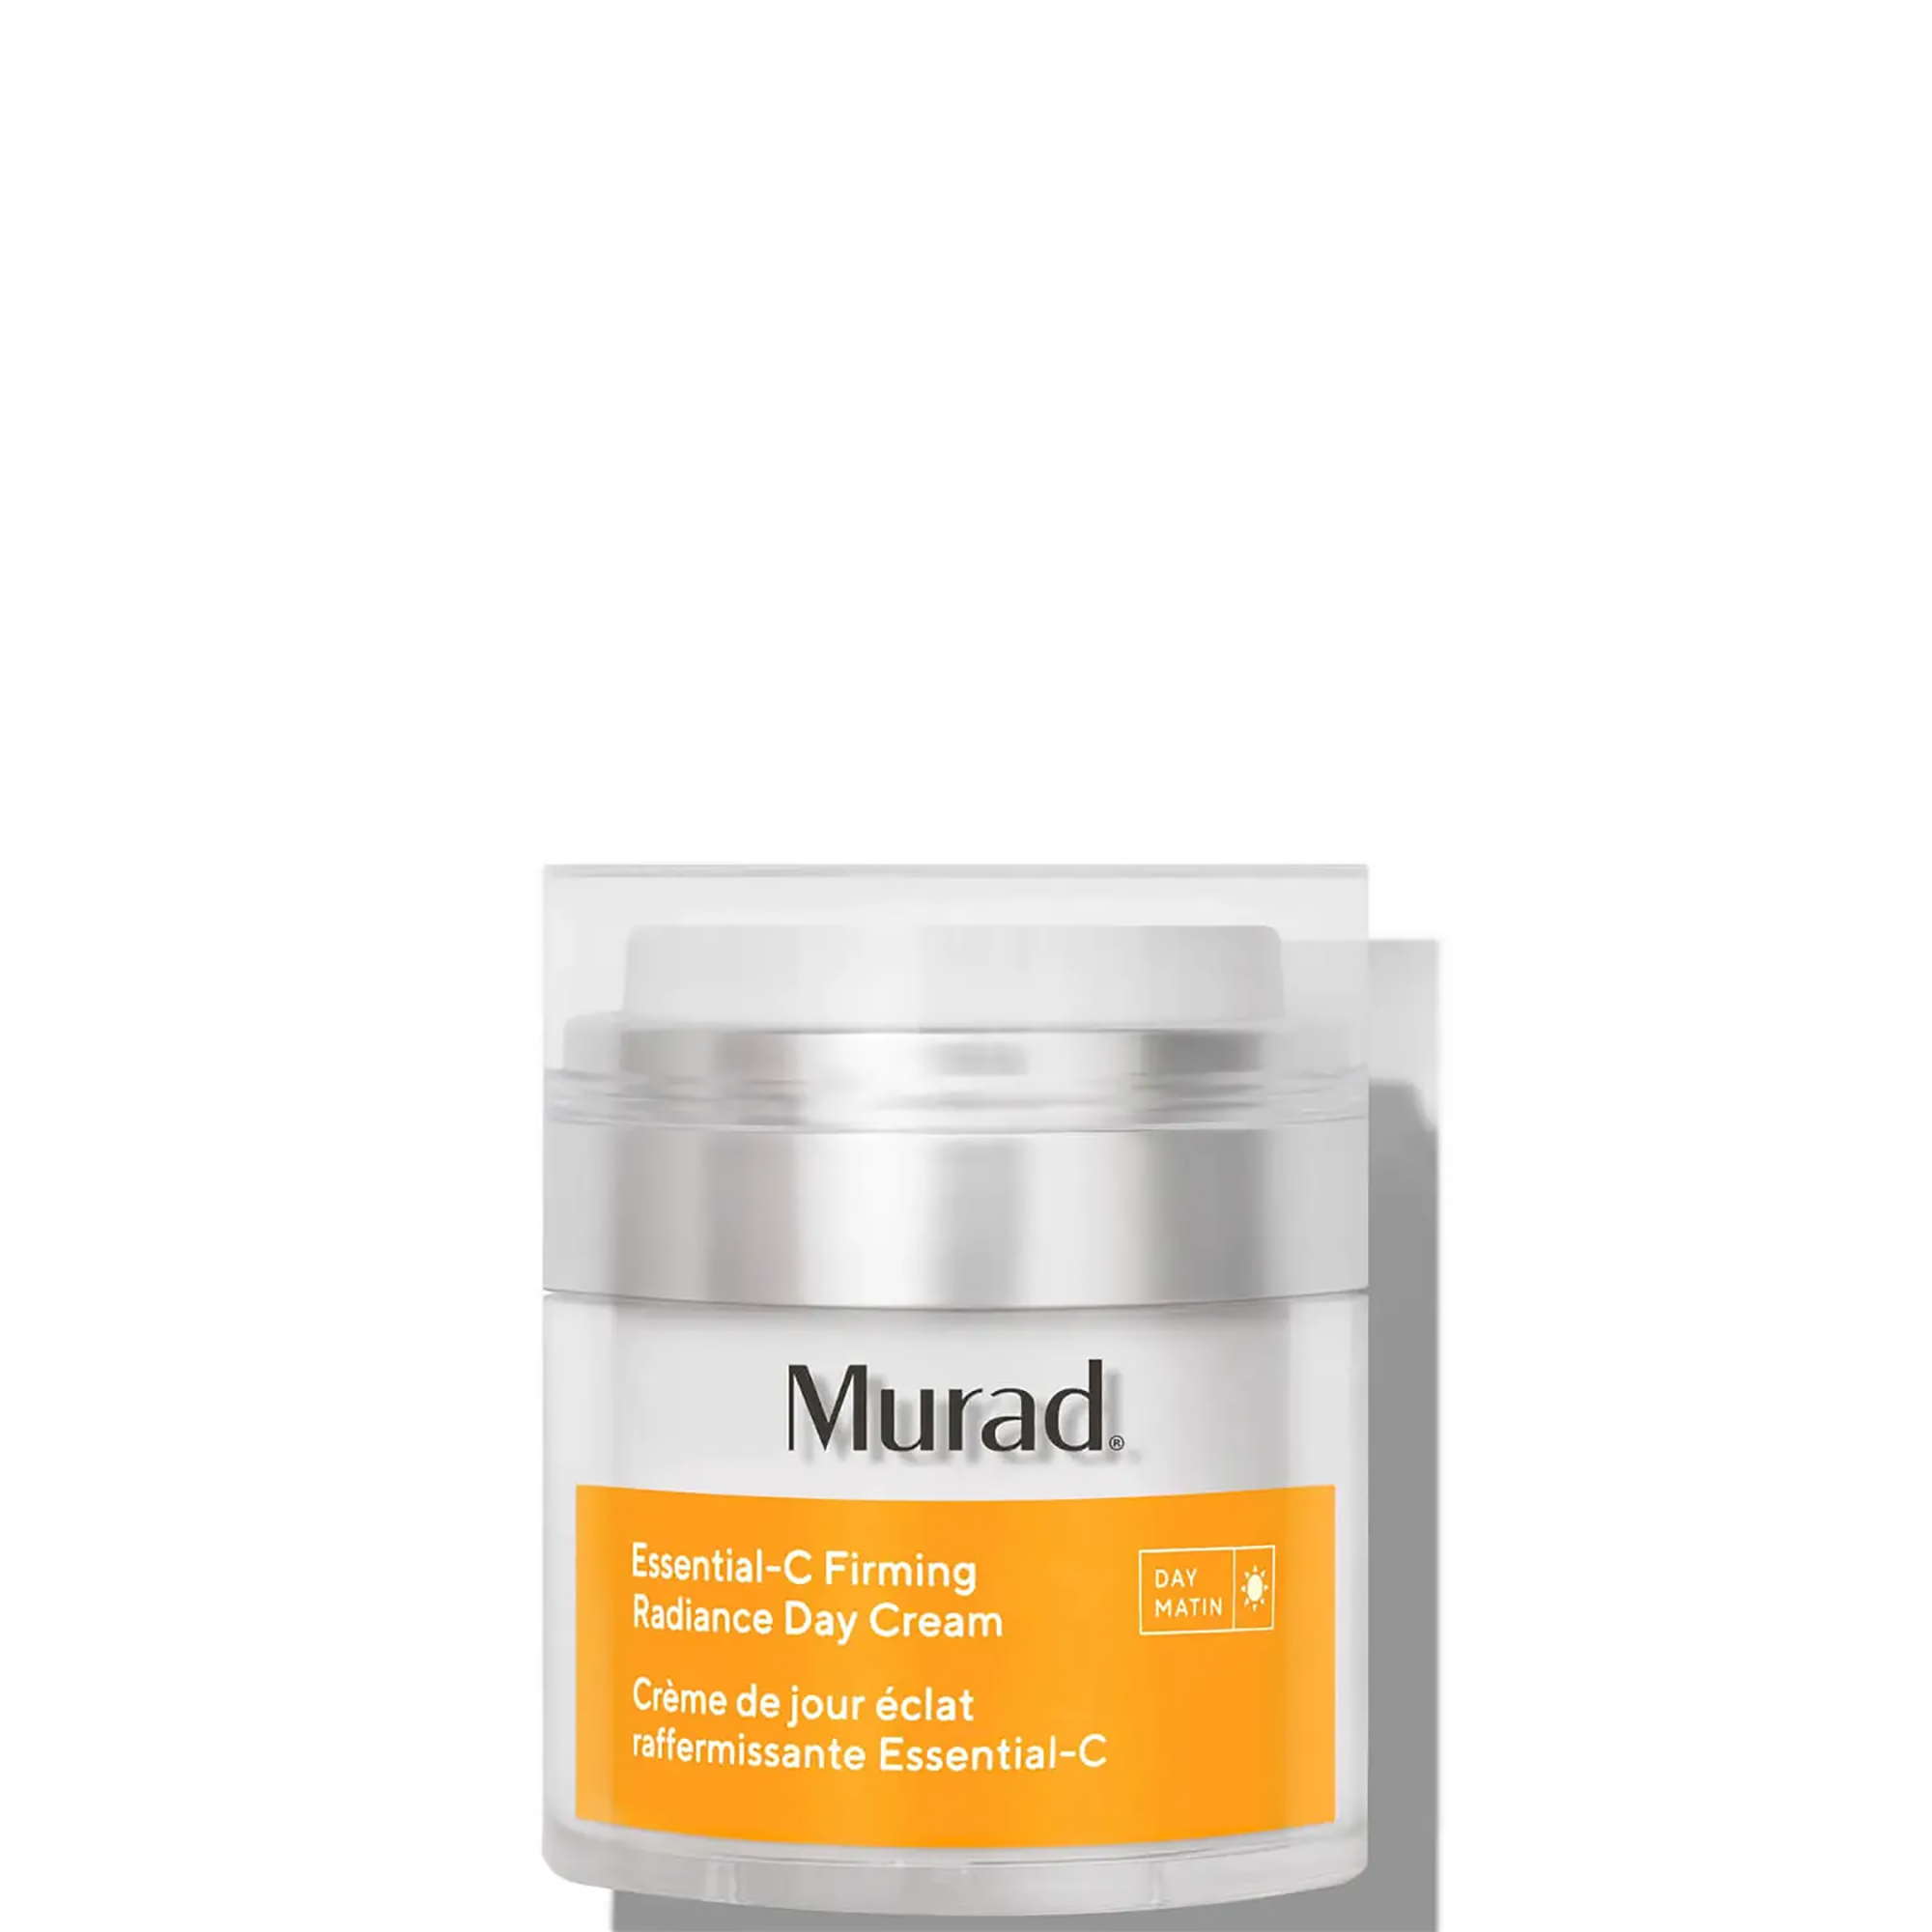 Murad Essential-C Firming Radiance Day Cream / 1.7 oz